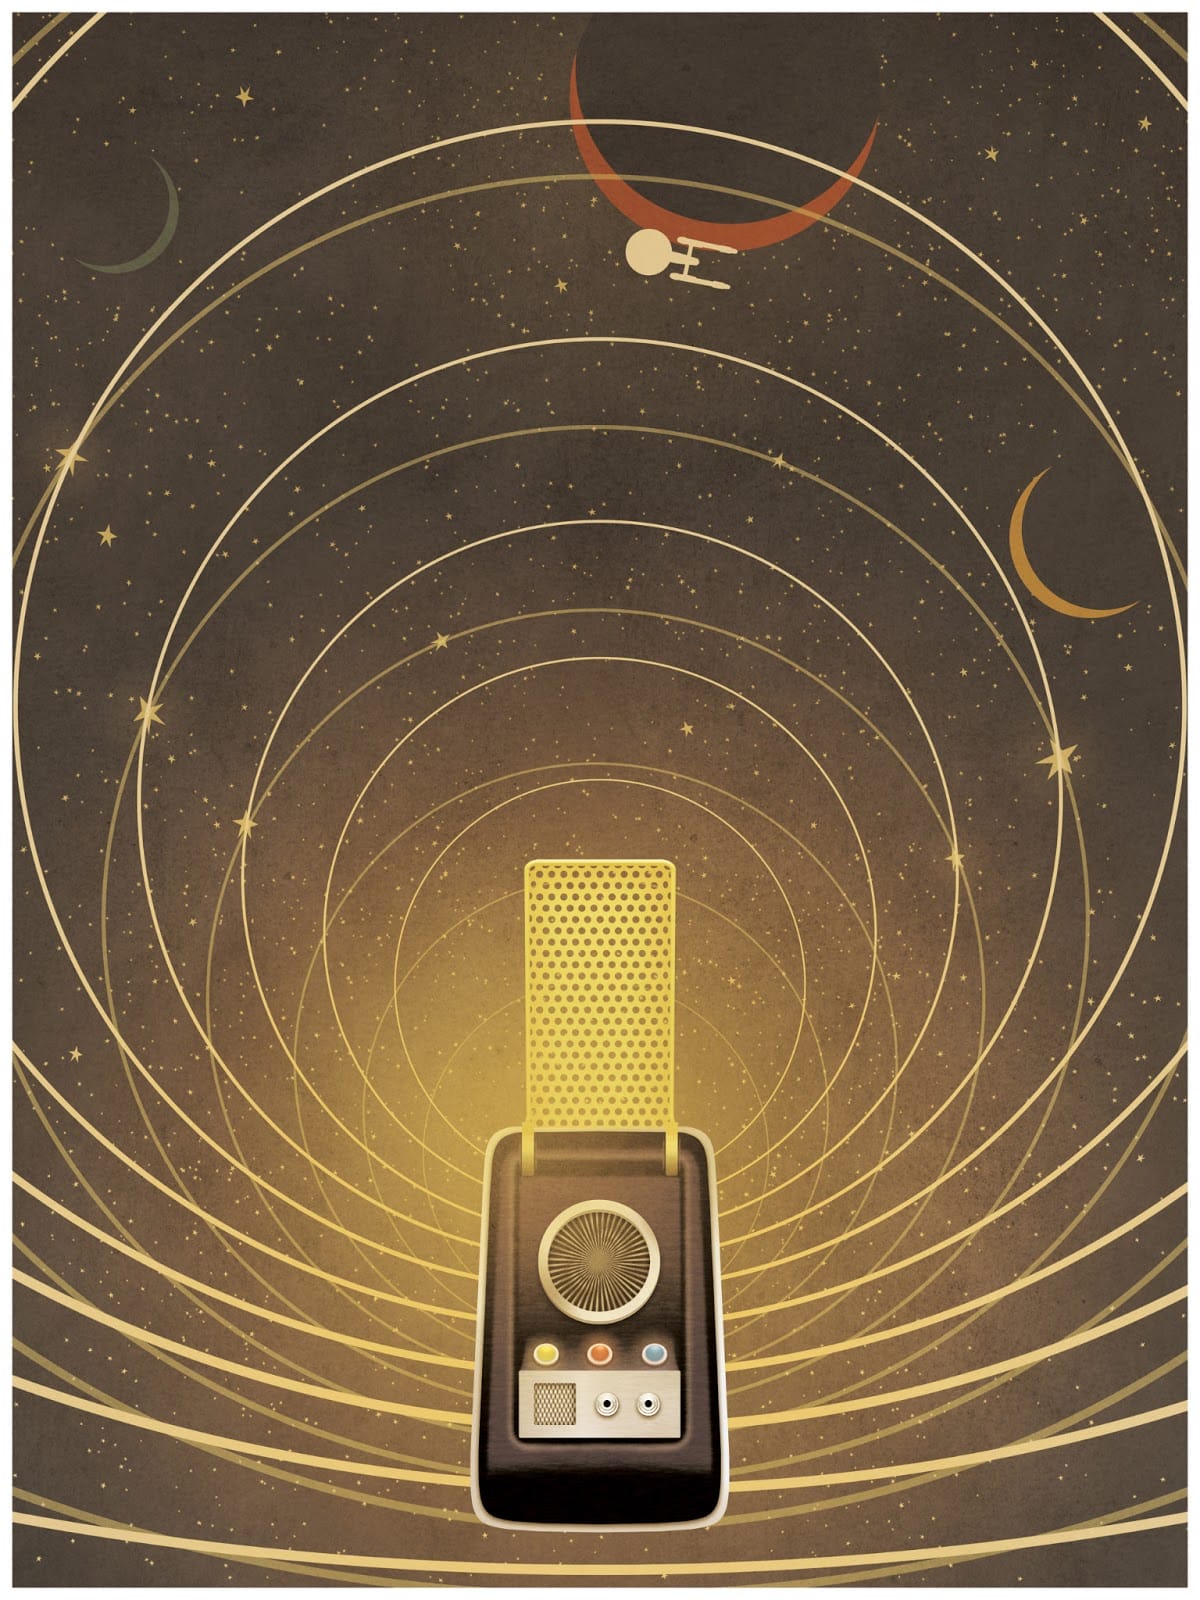 Star Trek gadgets as posters